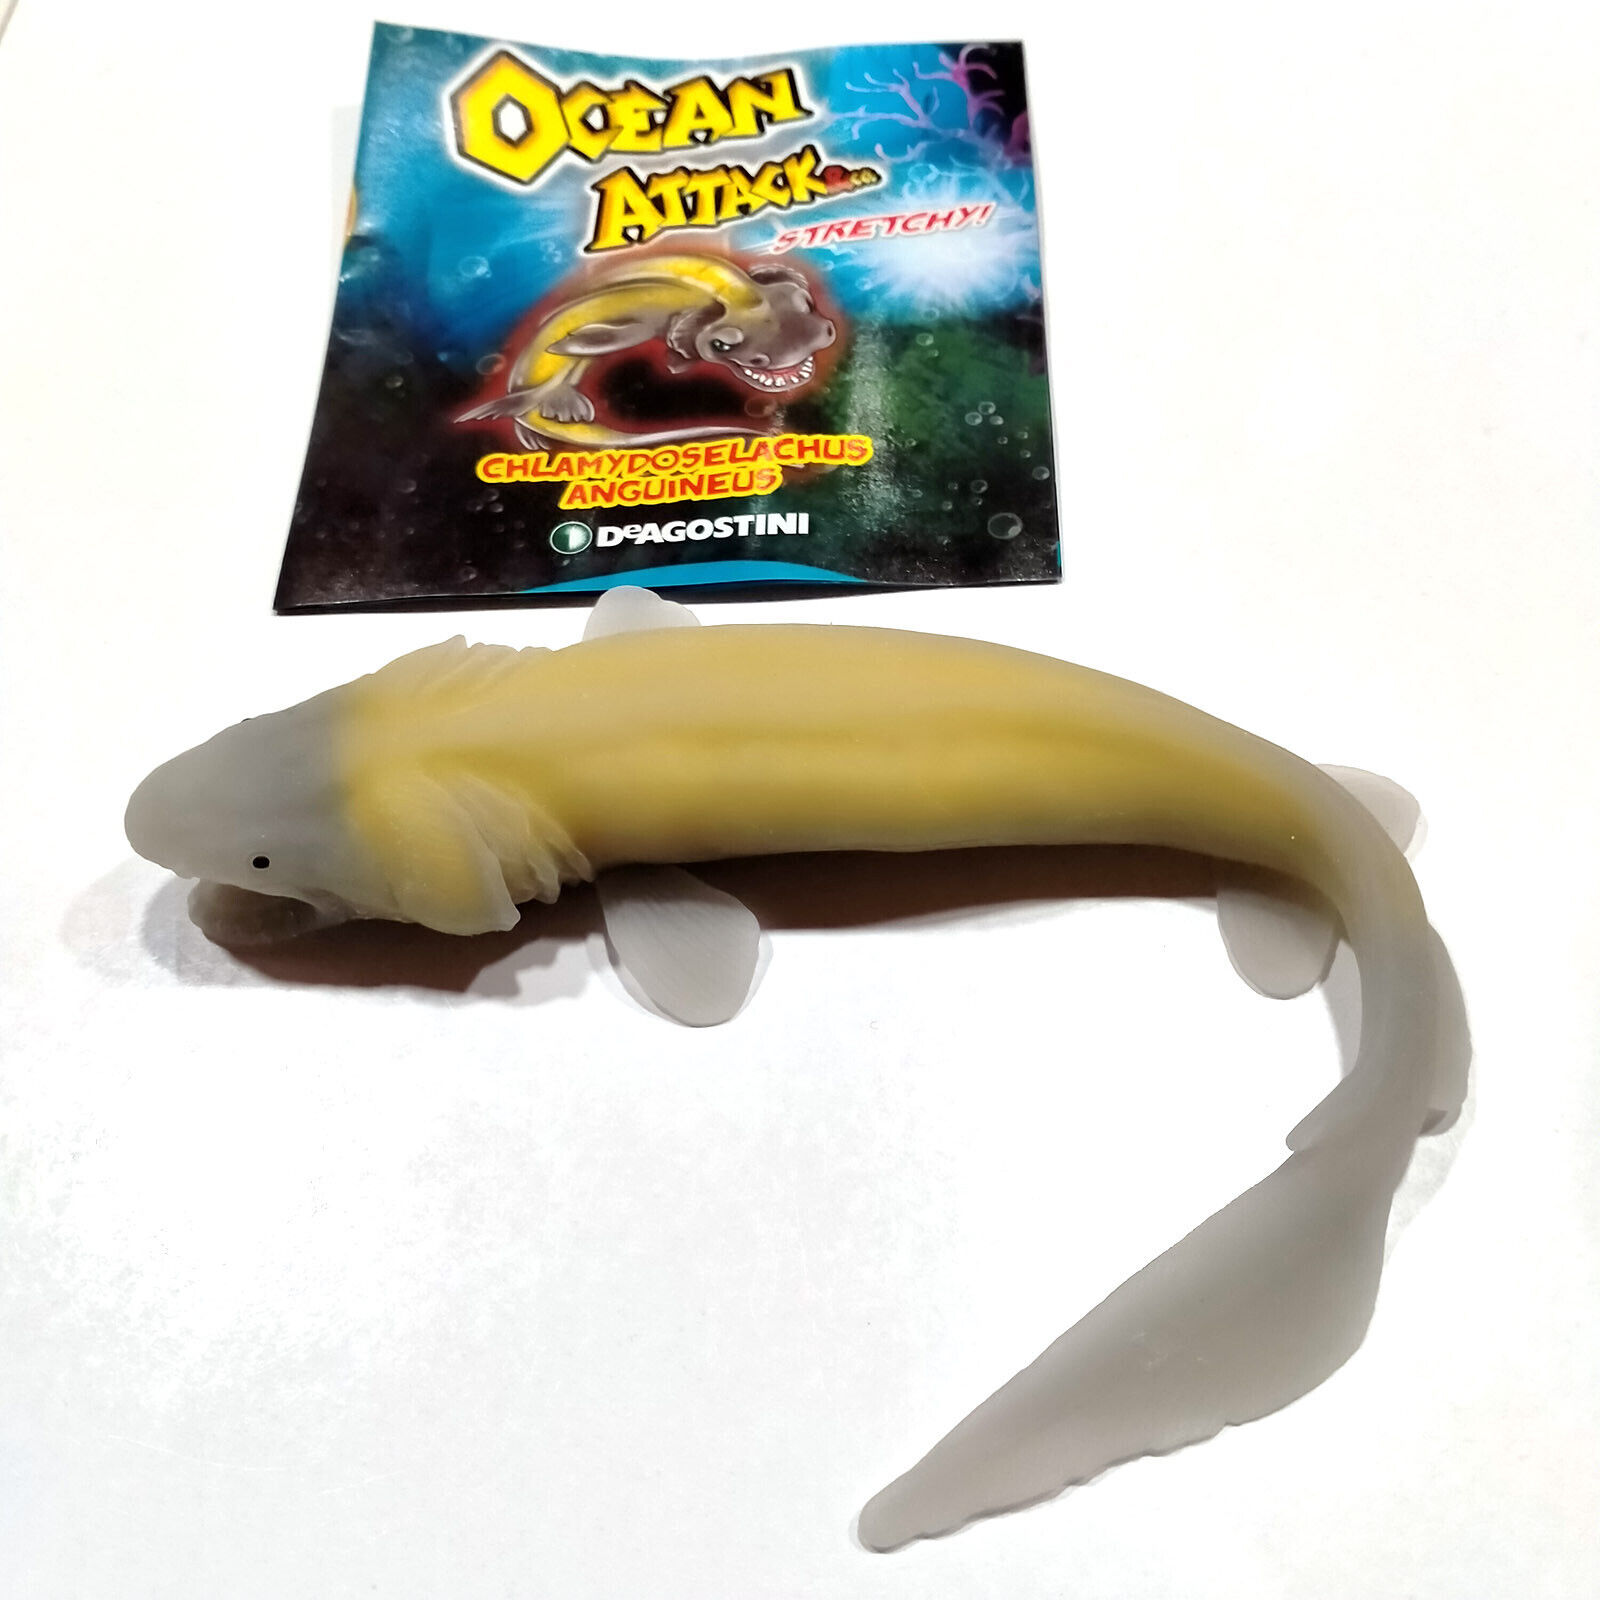 Frilled shark soft rubber jiggler fish by DeAgostini Ocean Attack & co. series